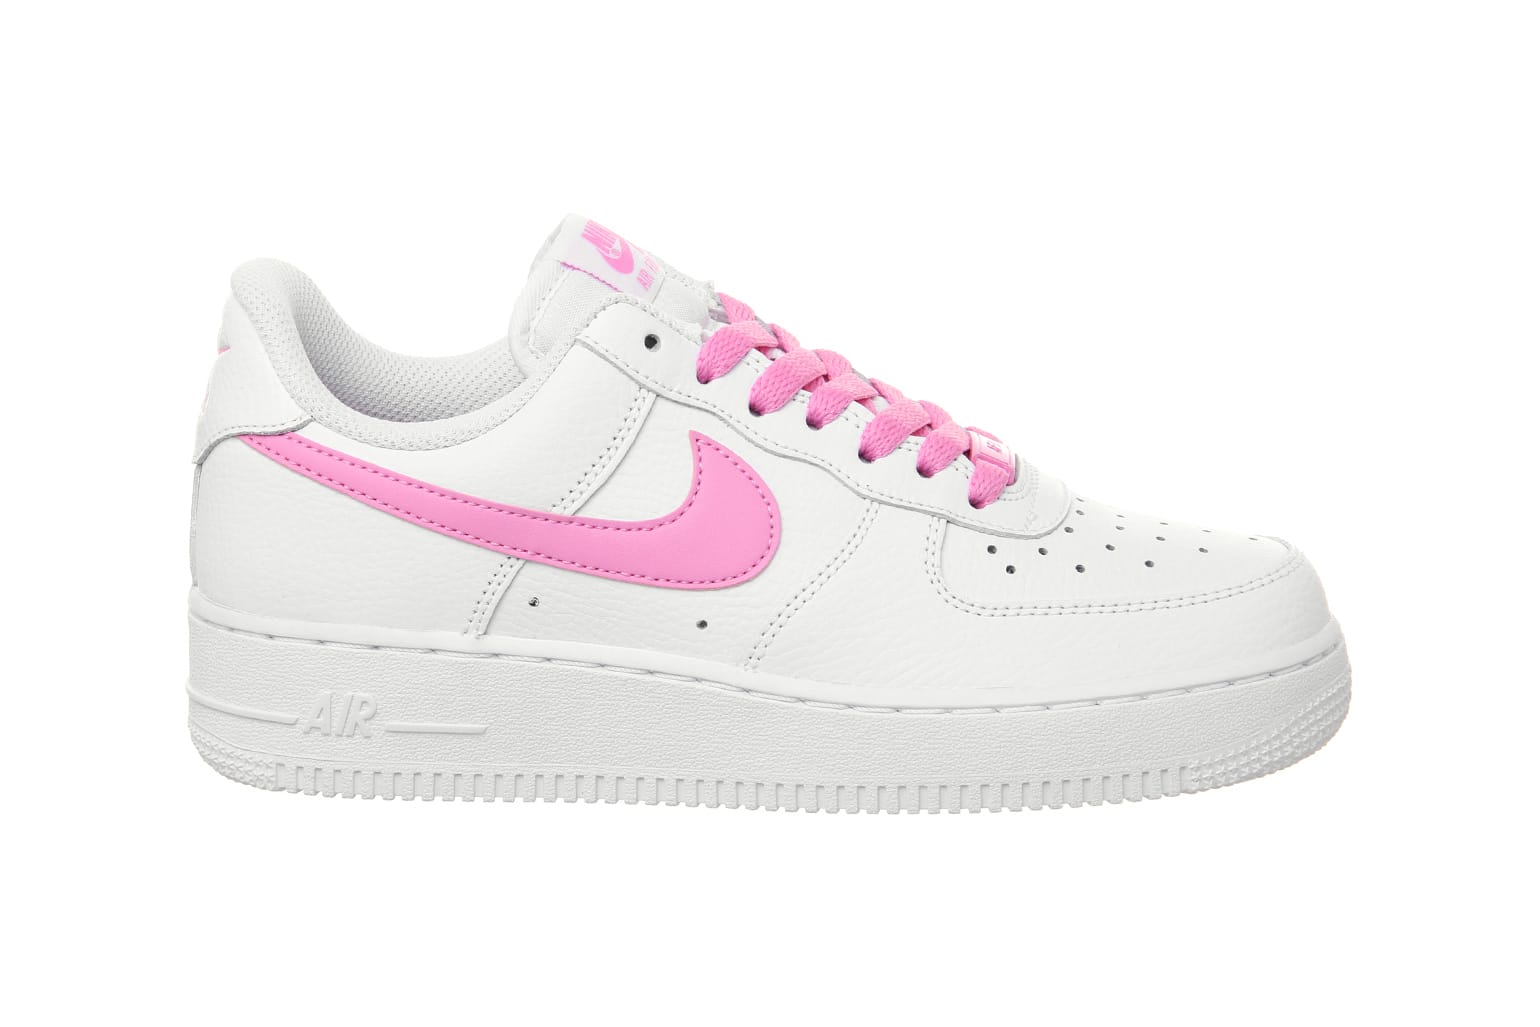 Найк с сердечками. Nike Air Force 1 розовые. Nike Air Force 1 White Pink. Nike Air Force 1 lv8 Pink. Nike Air Force 1 Pink.